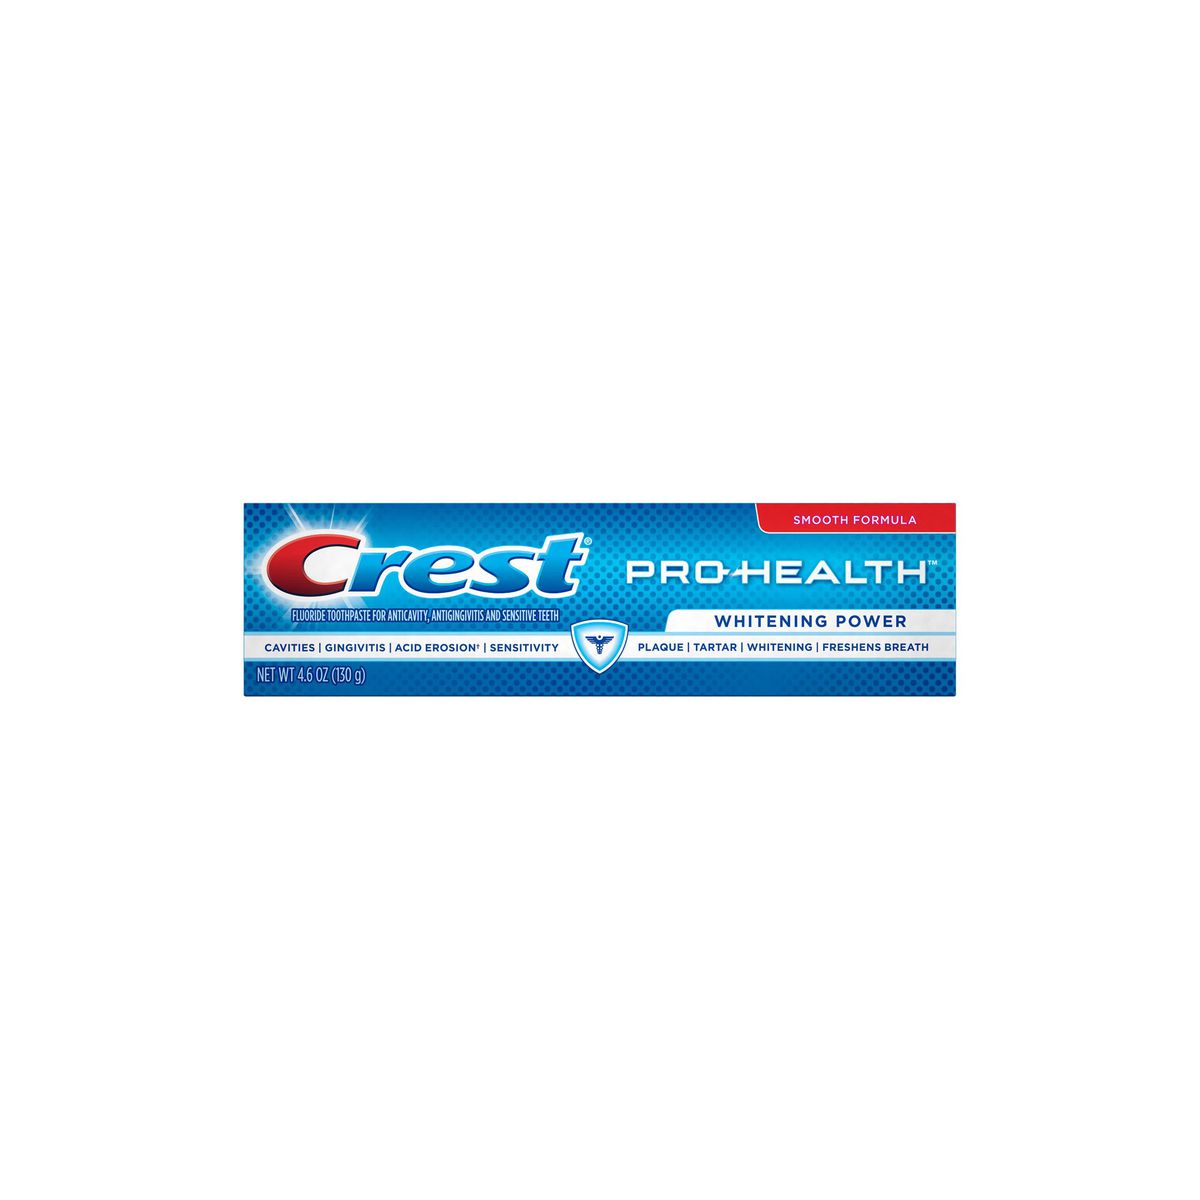 Best whitening toothpaste: Crest Pro-Health Extra Whitening Power Toothpaste